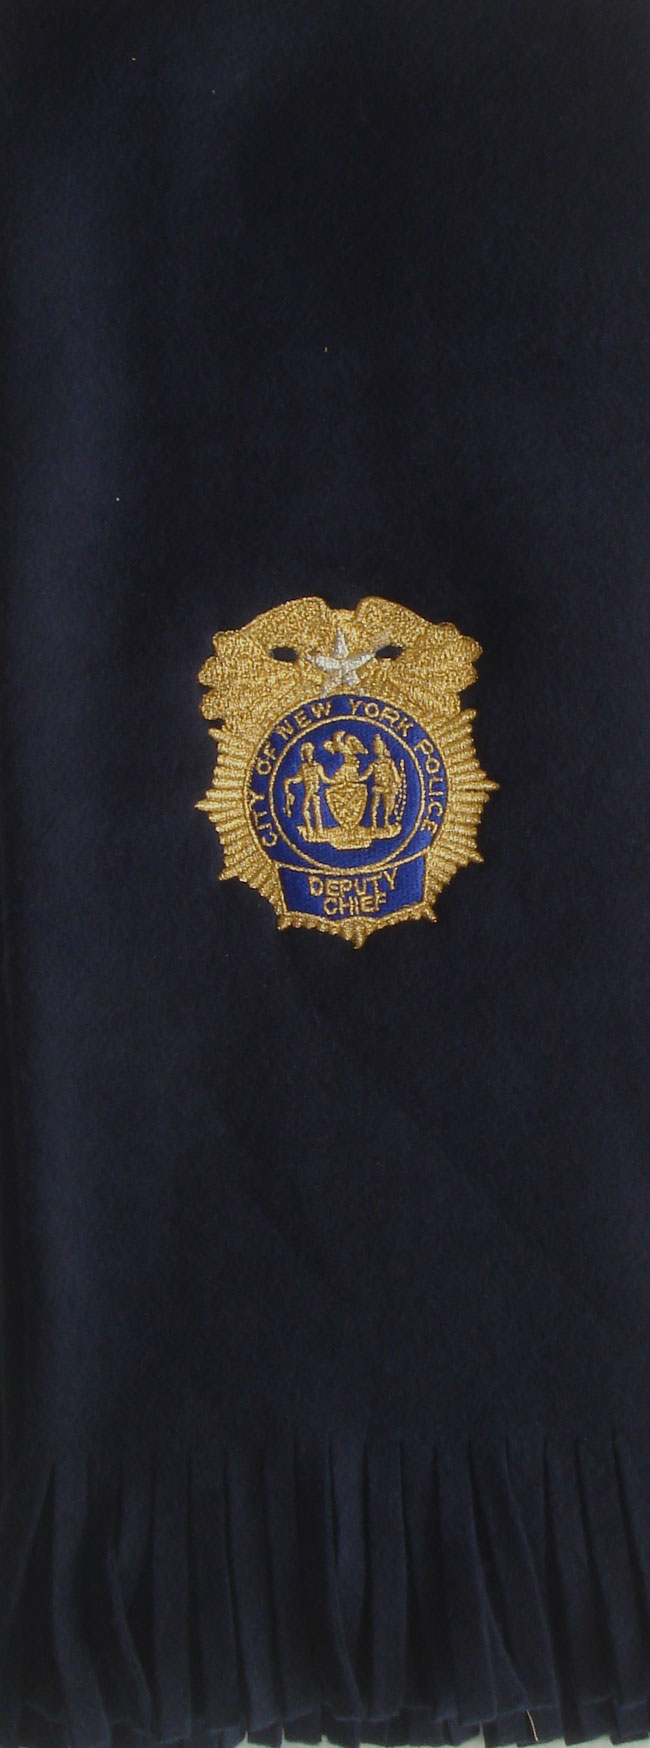 NYC Police Deputy chief scarf - Navy Polar Fleece scarf with NYC Deputy Chief sh...